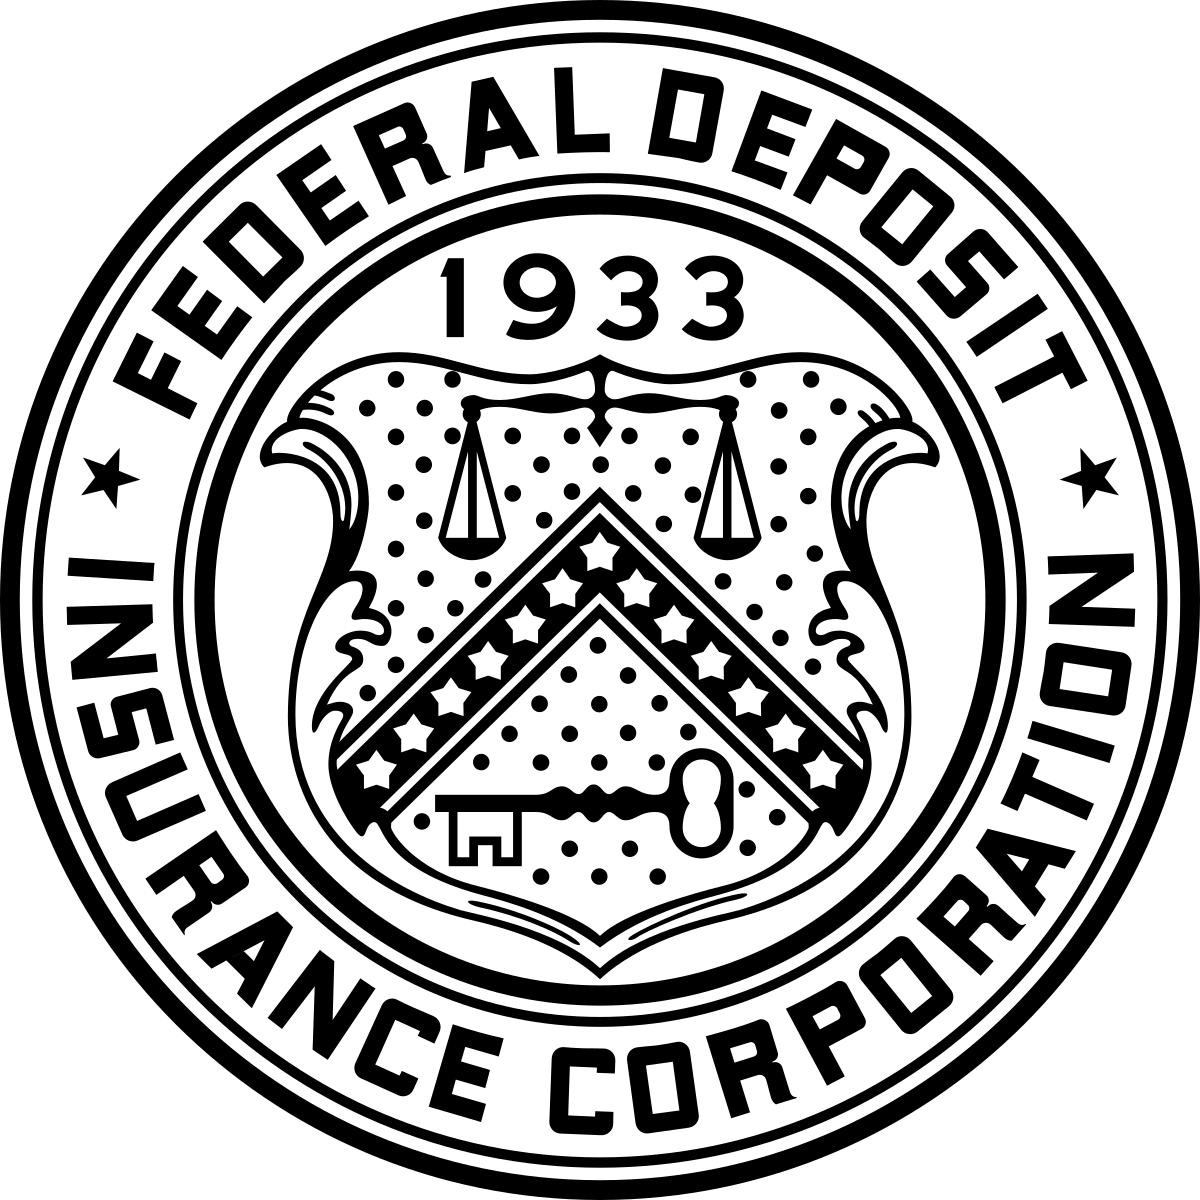 FDIC Logo - Federal Deposit Insurance Corporation